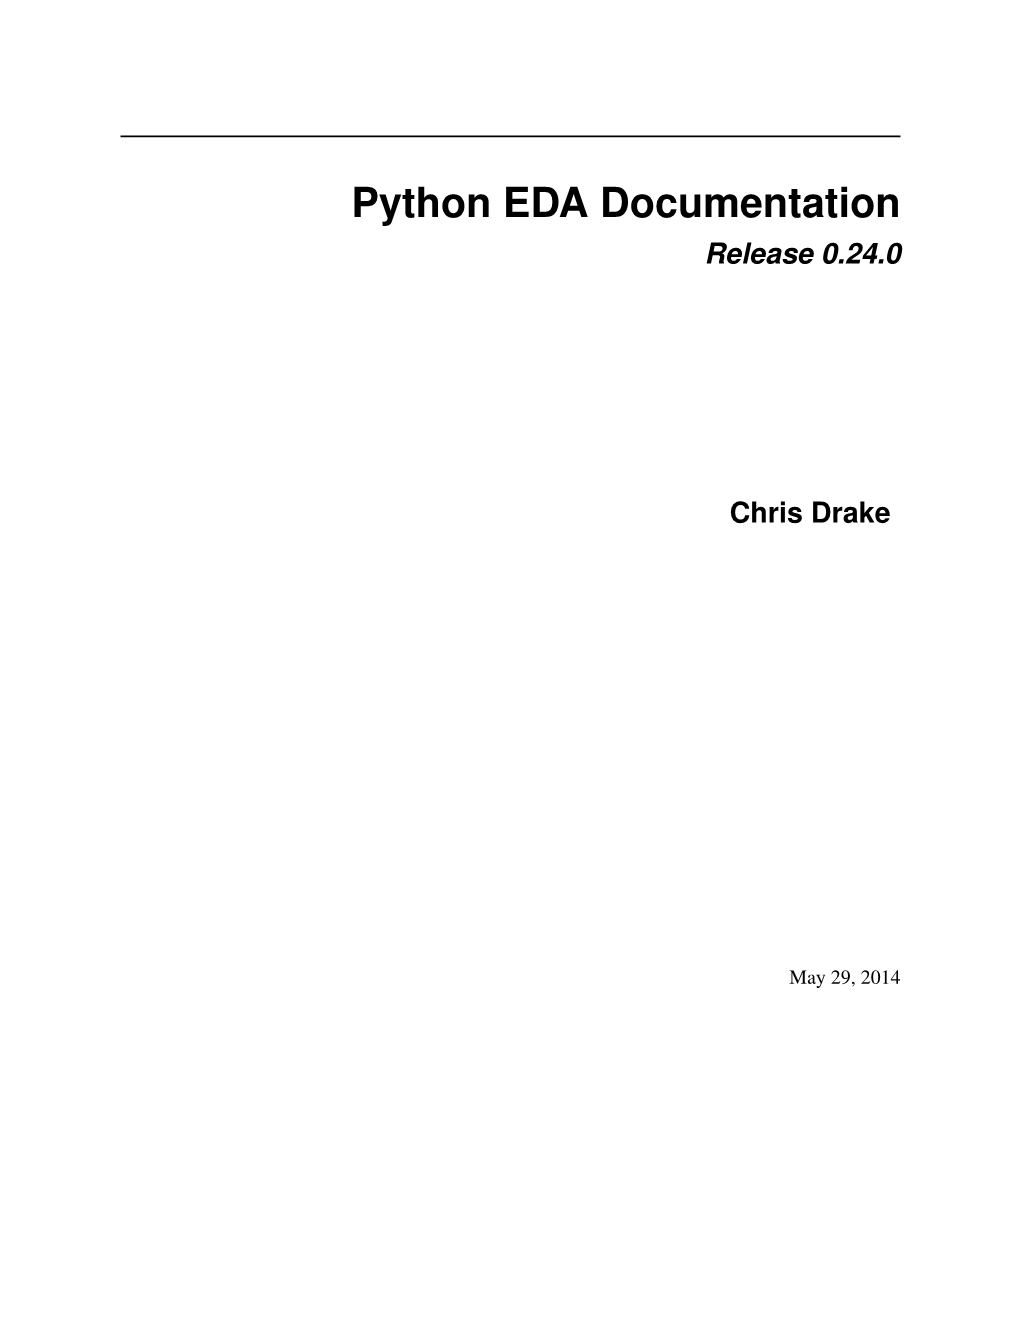 Python EDA Documentation Release 0.24.0